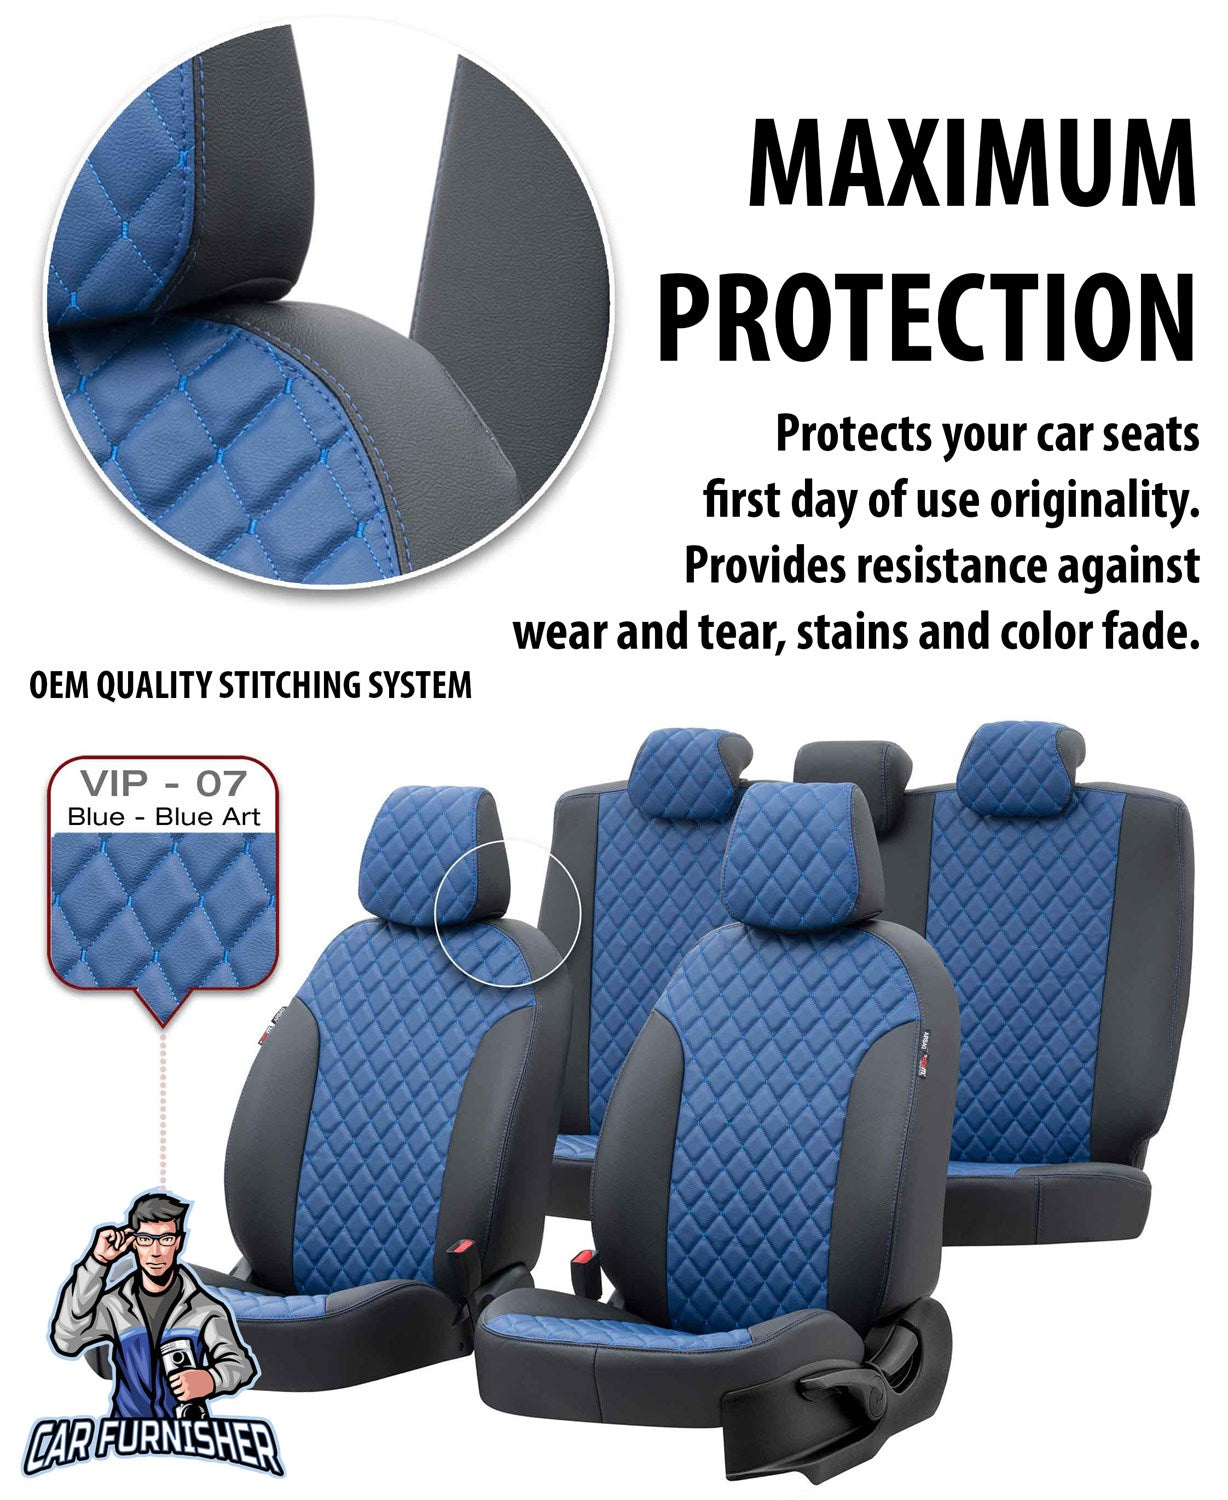 Seat Cordoba Seat Covers Madrid Leather Design Blue Leather